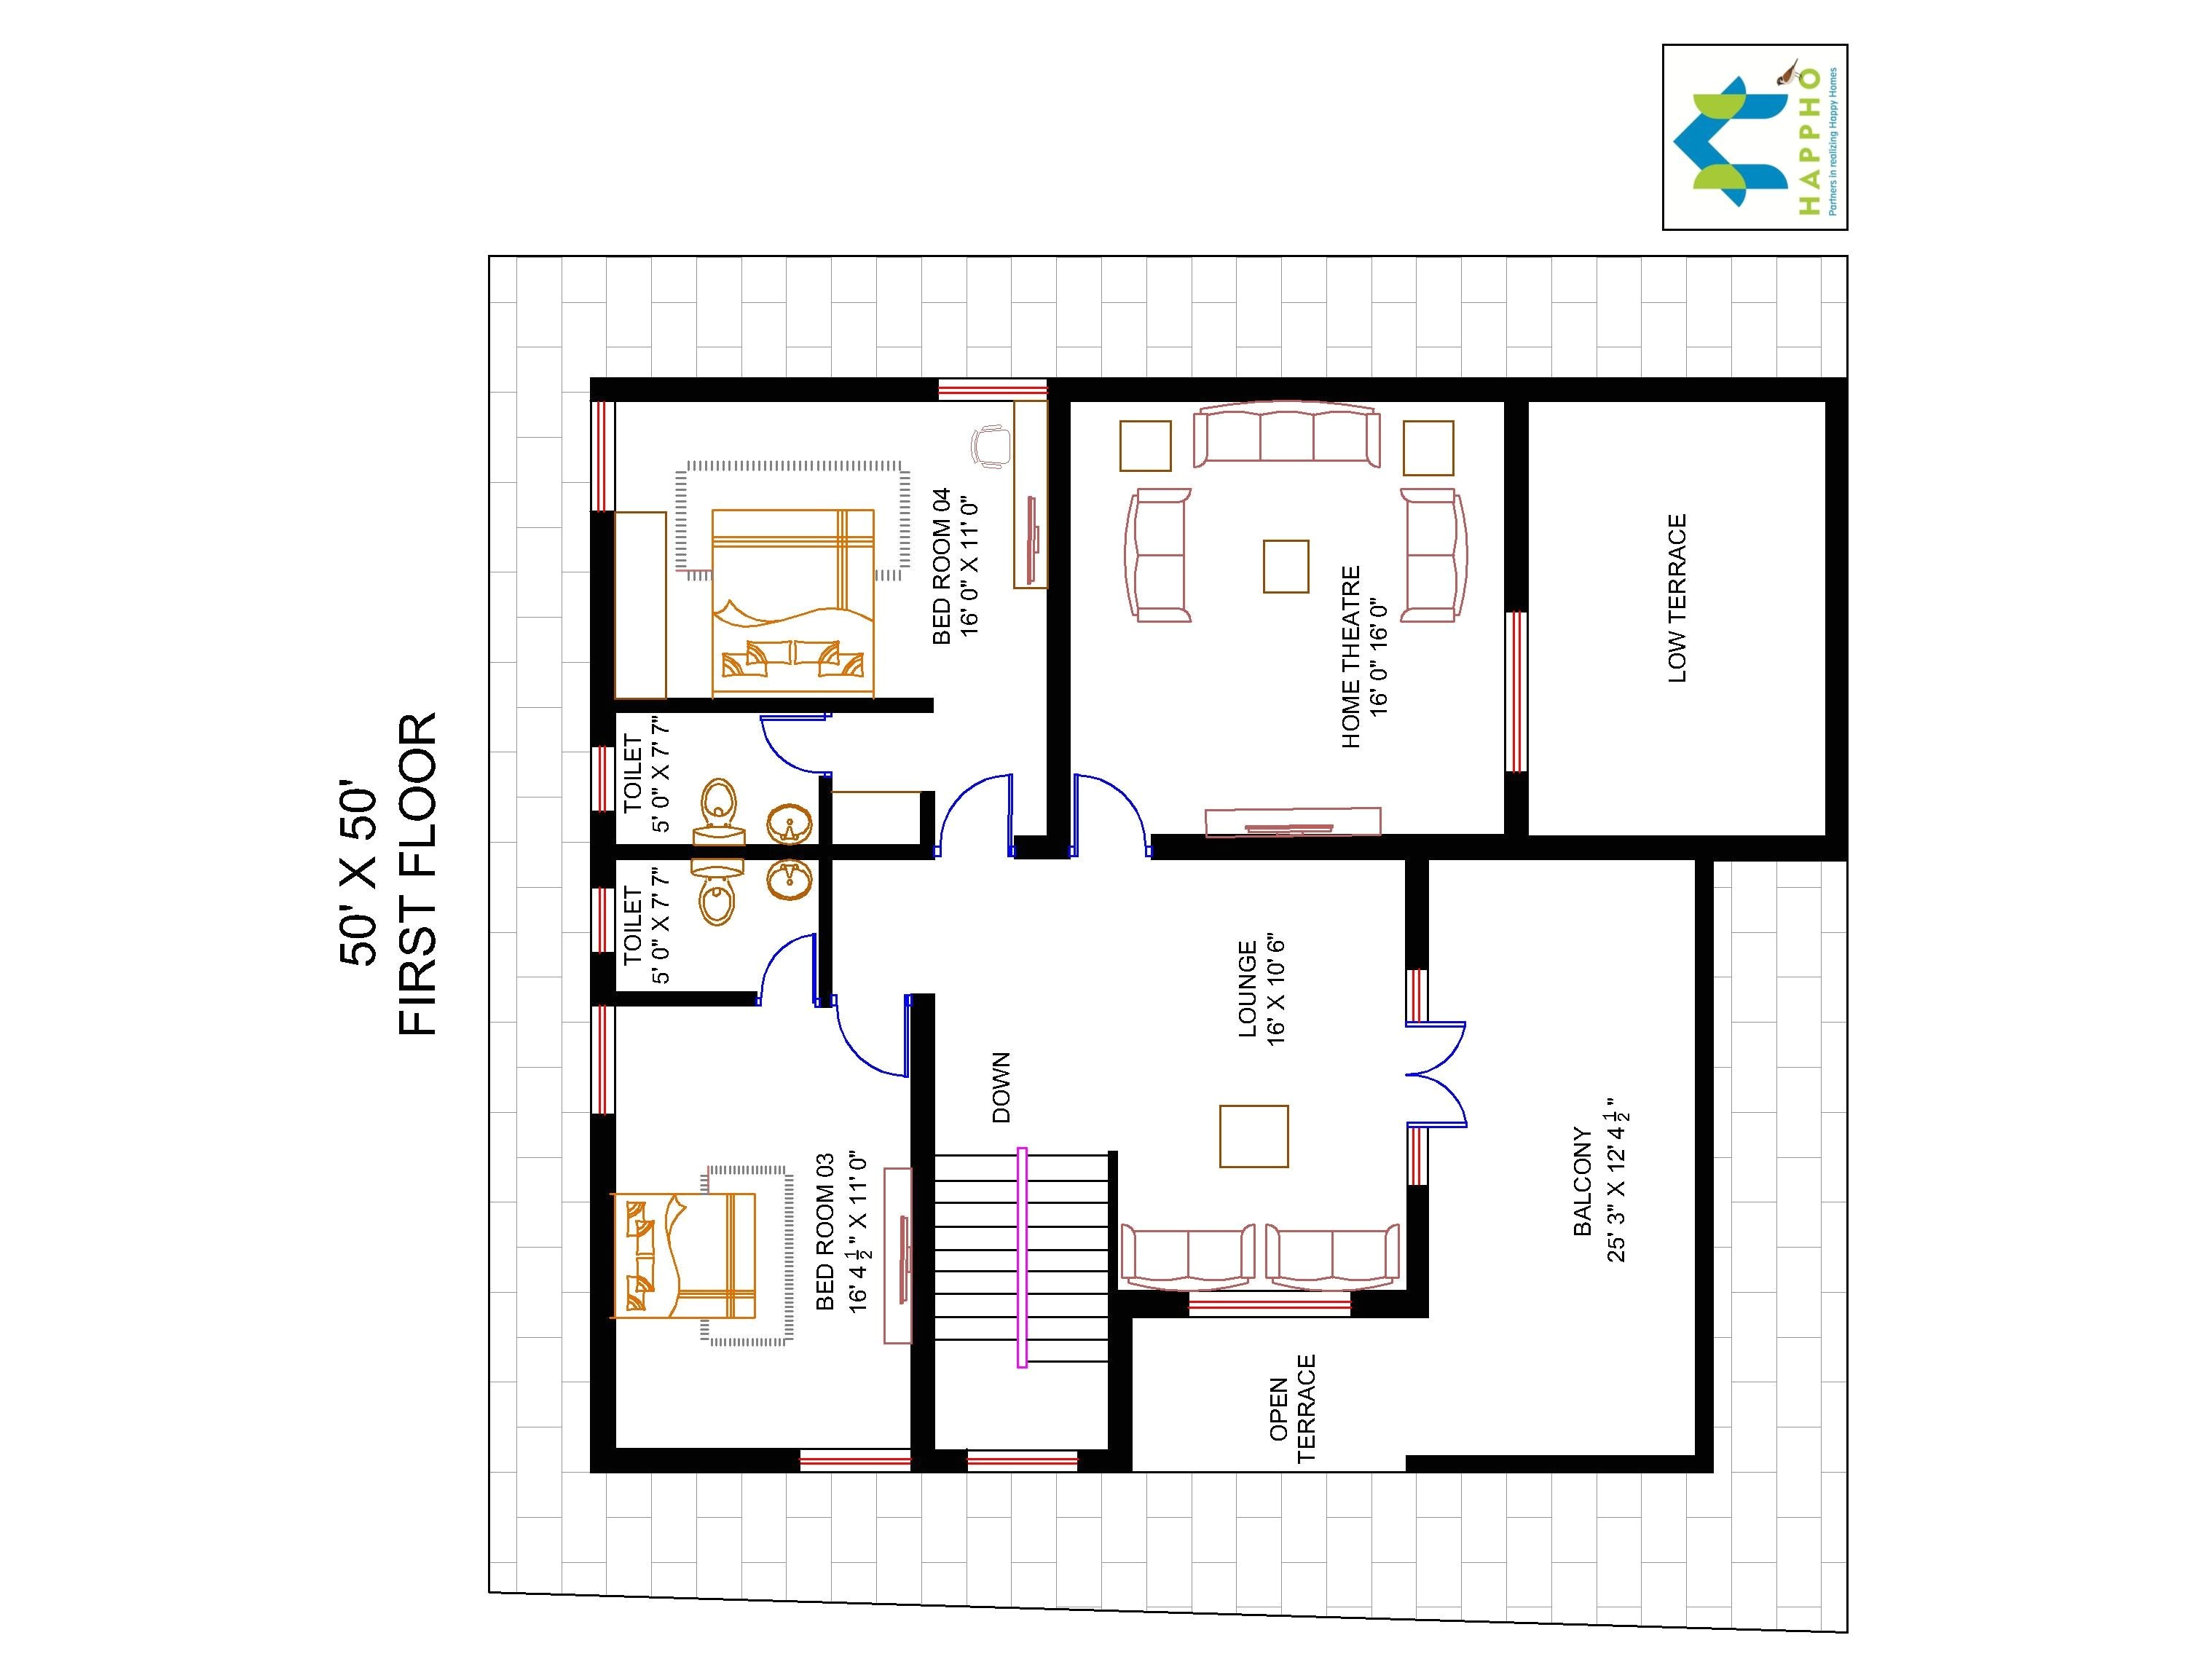 2500 Square Feet Home Plans